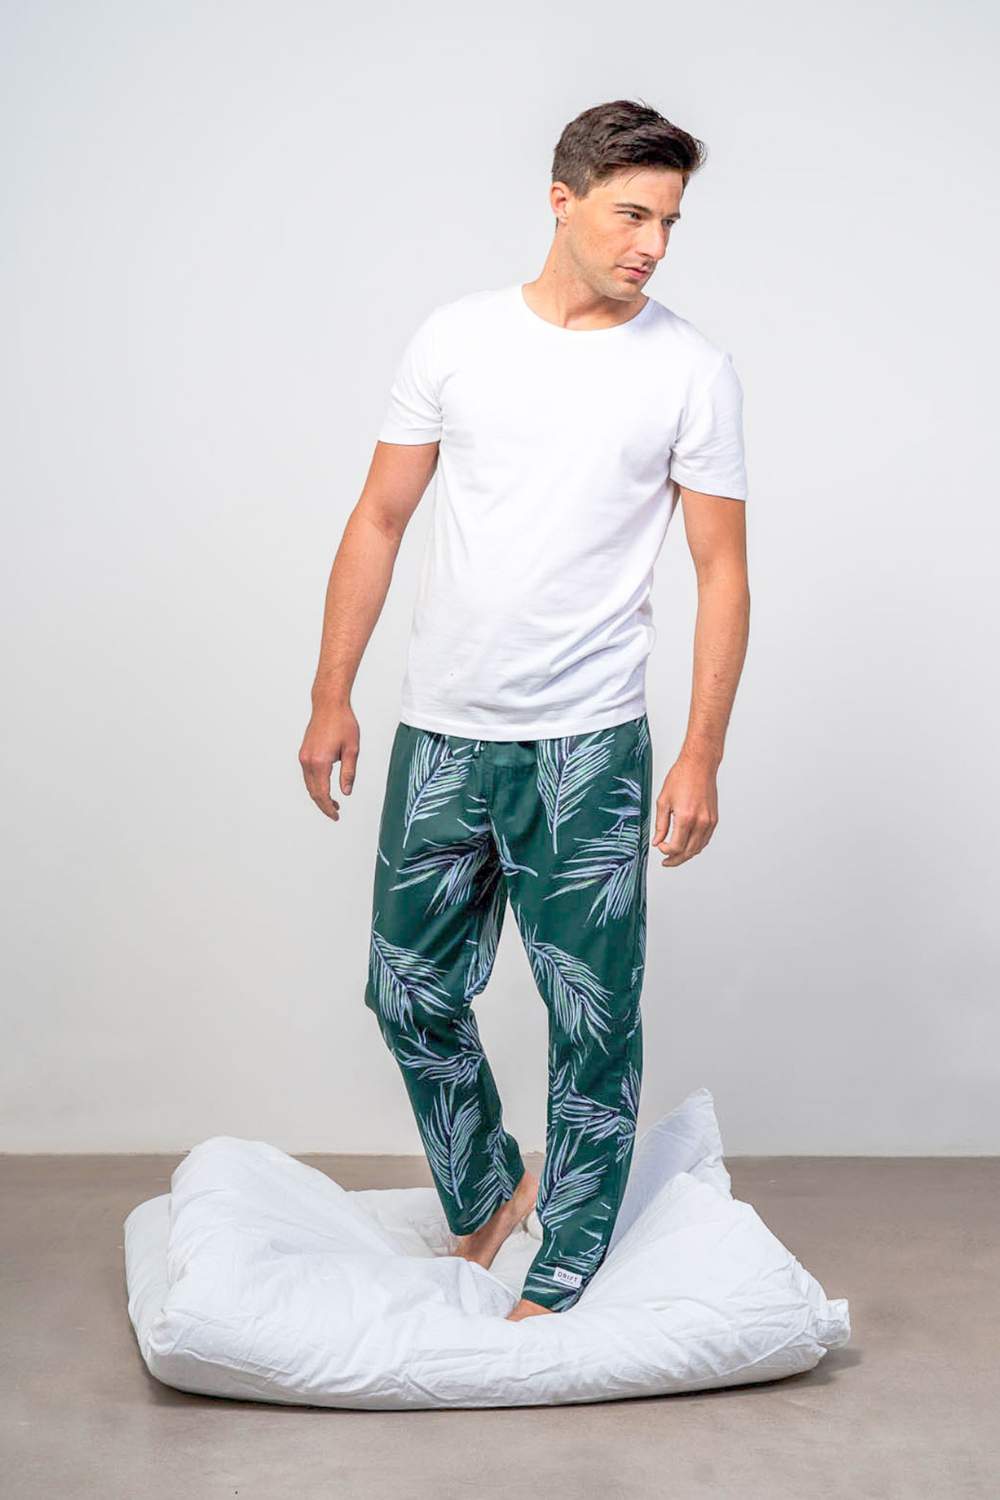 Men's long pyjama set long bottoms - cabo de rama print dark green